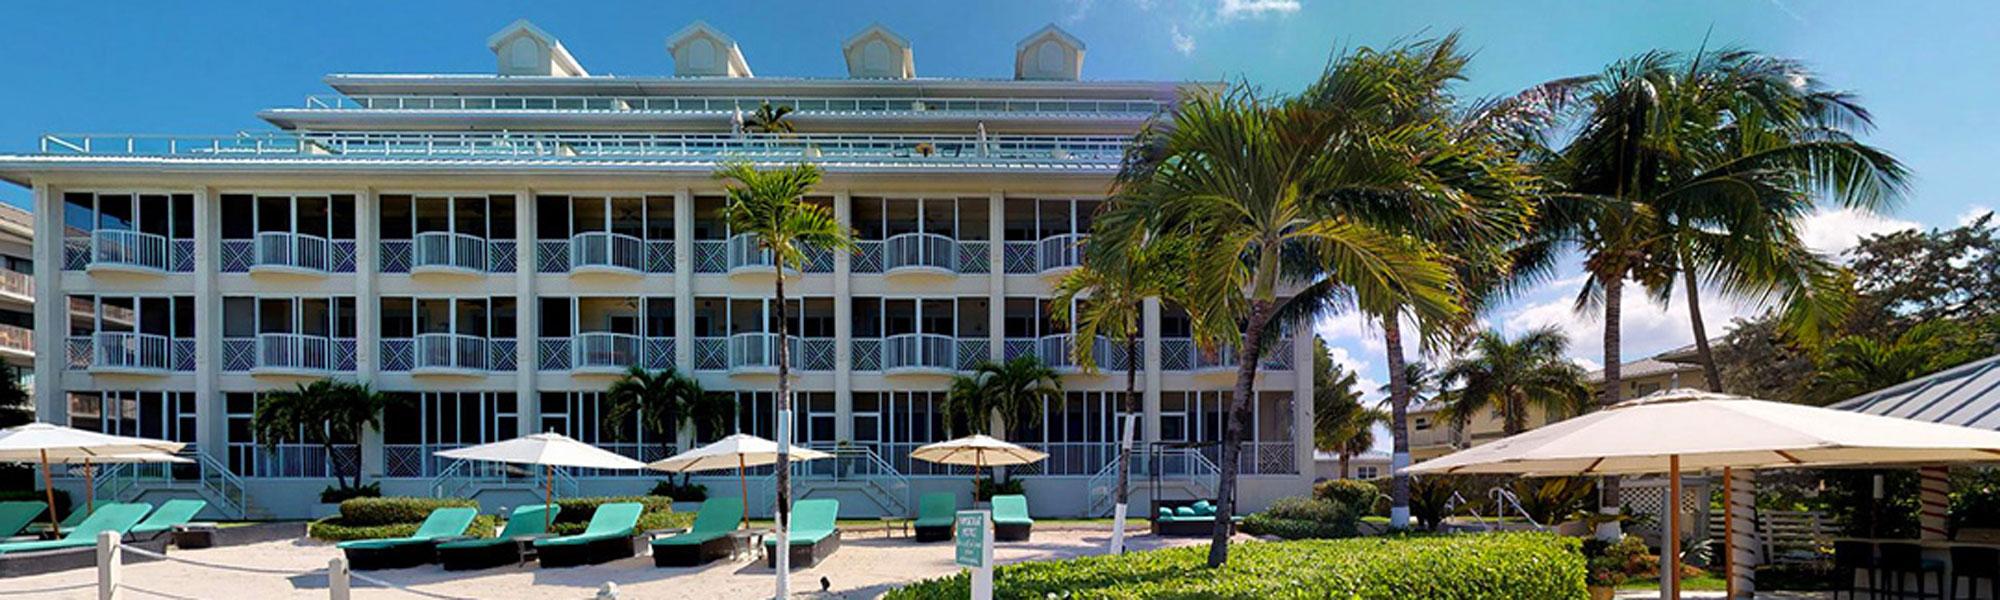 South Bay Beach Club, Seven Mile Beach | ERA Cayman Islands Real Estate